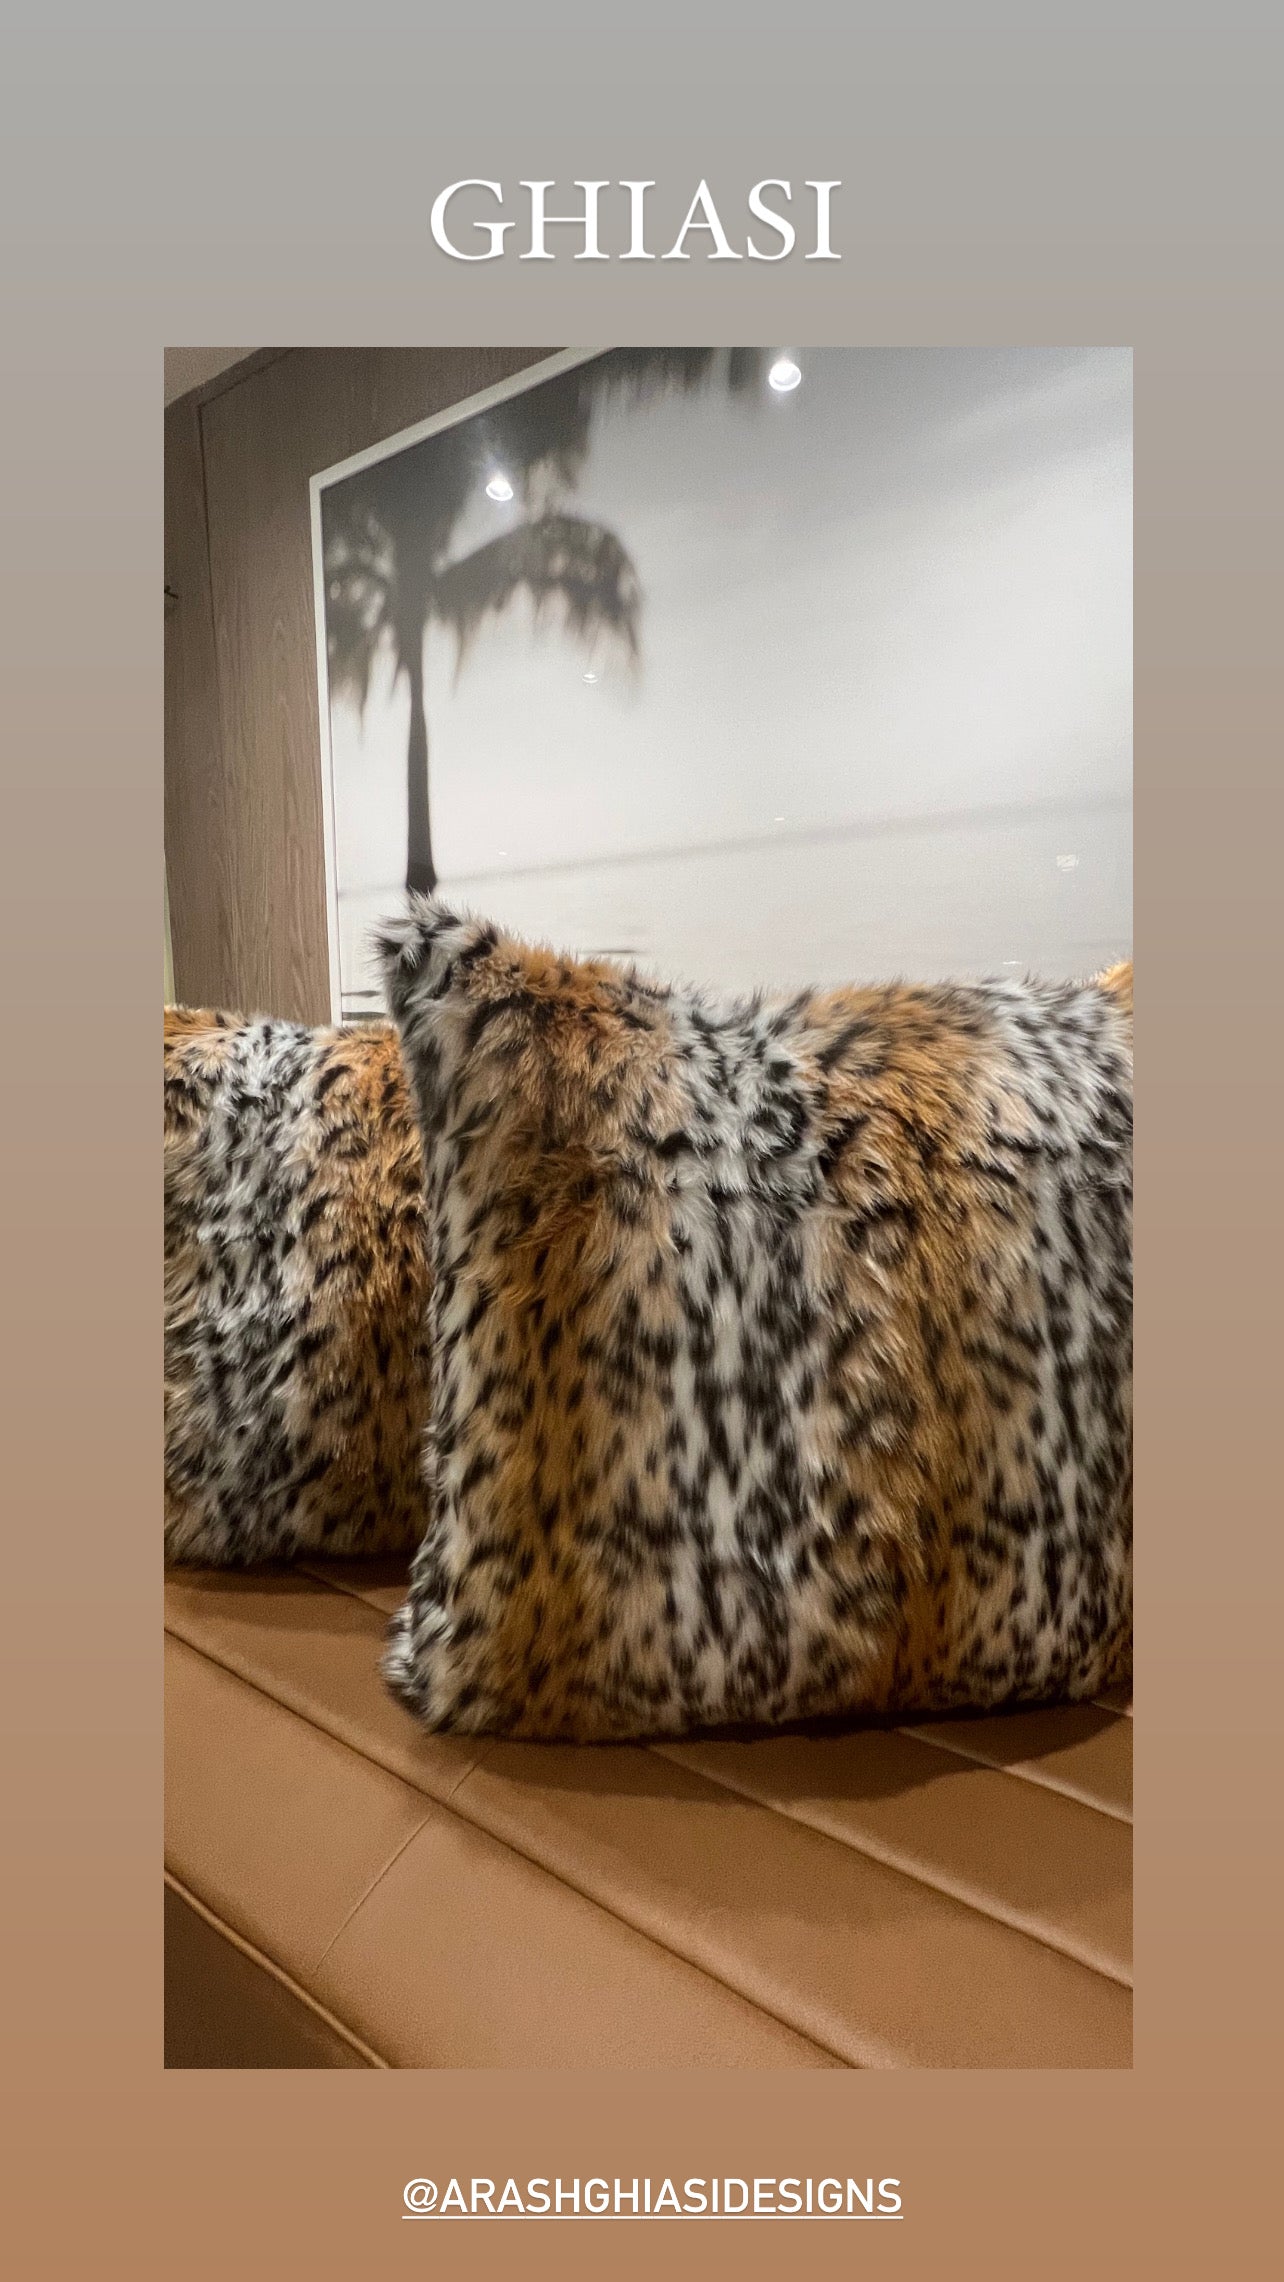 Faux Fur Wild Kingdom Pillows